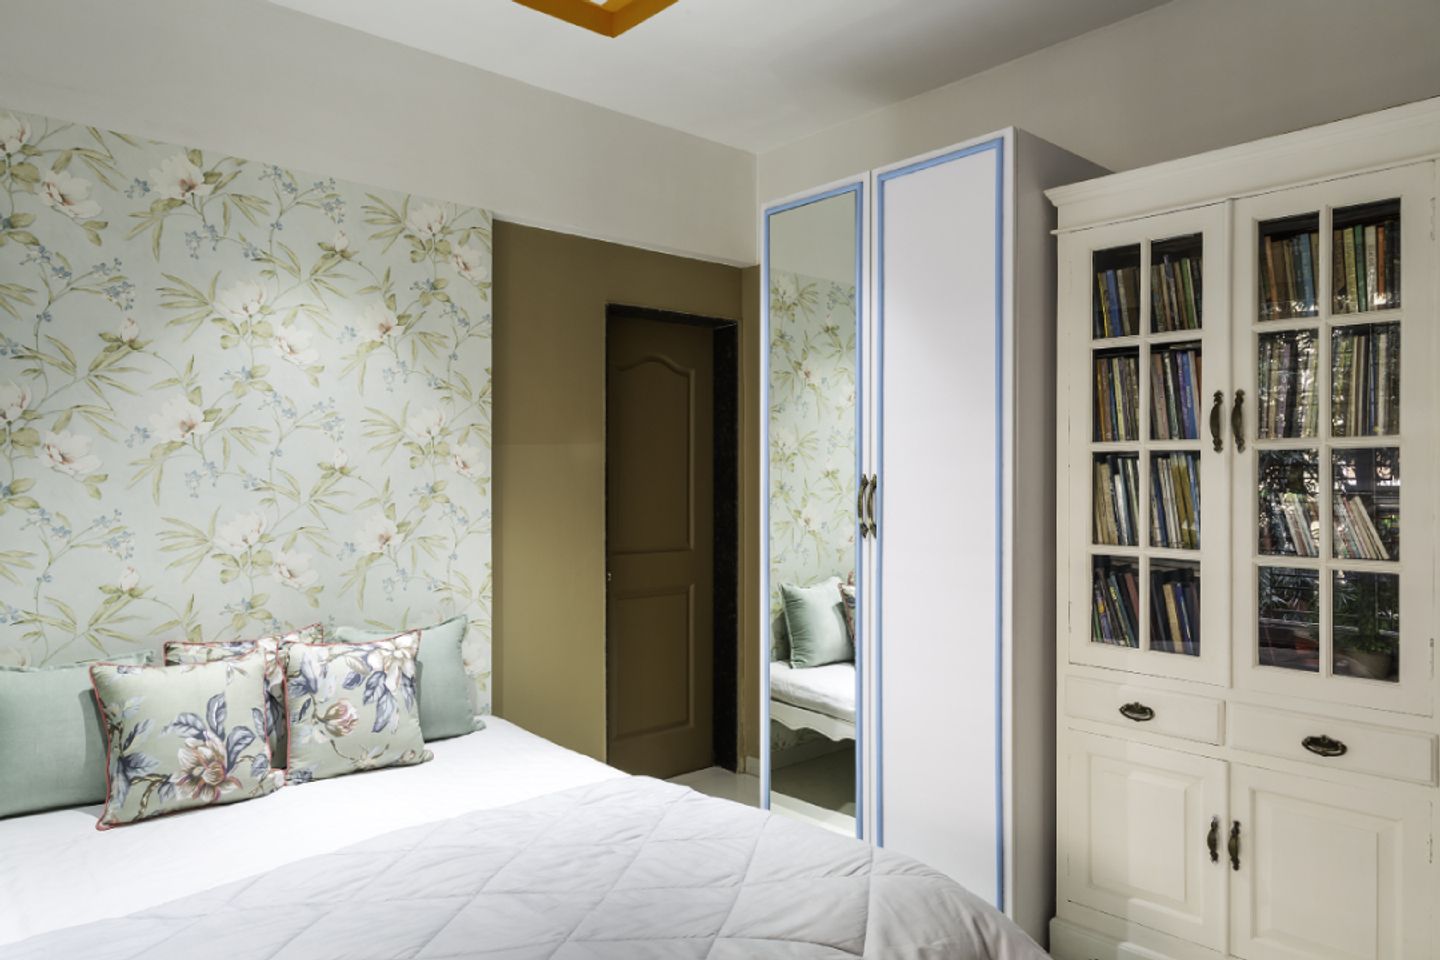 13x12 Ft Kids Room Design With Floral Wallpaper - Livspace